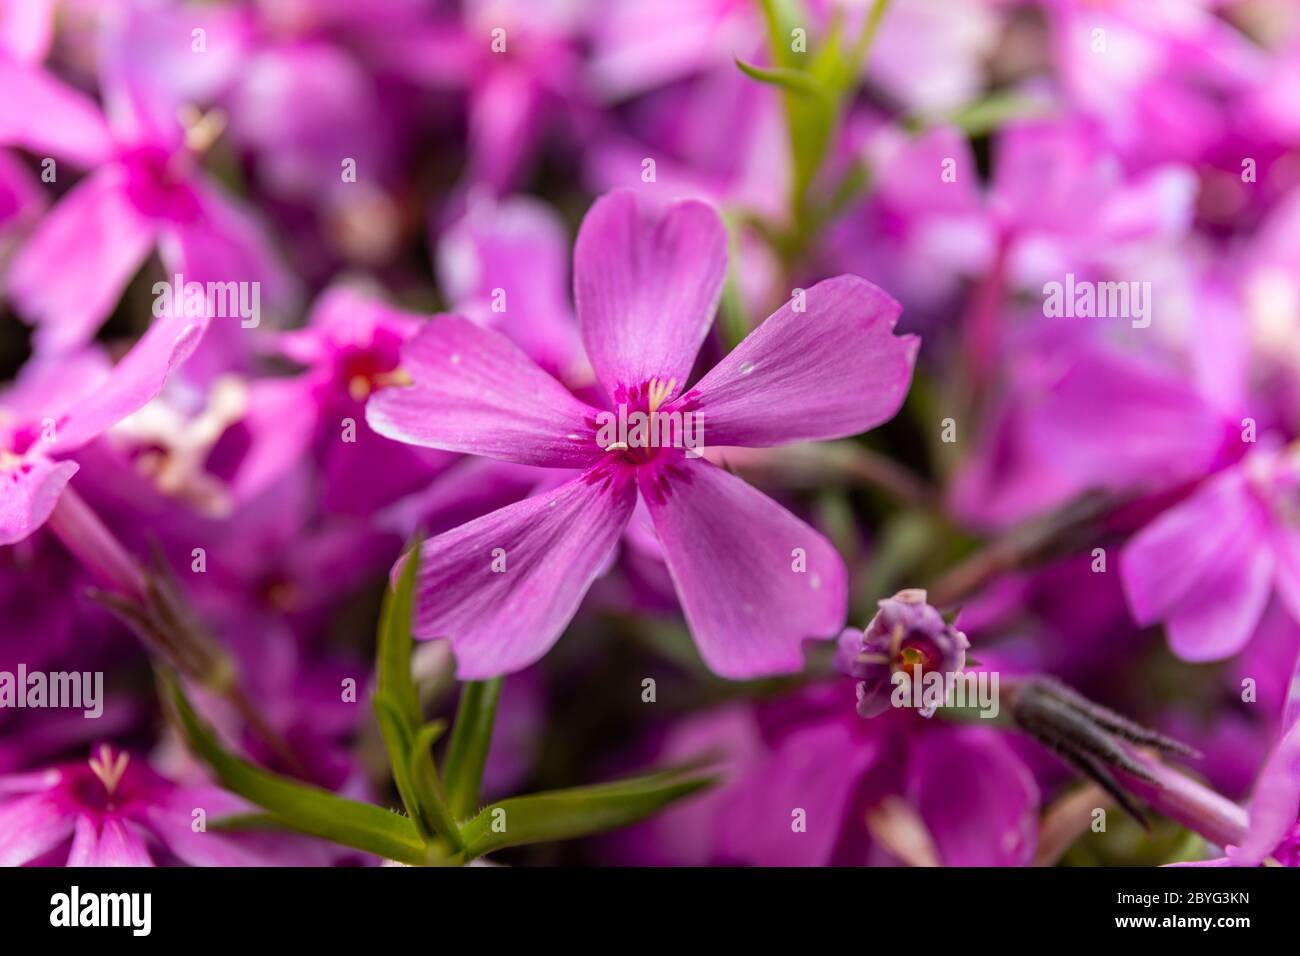 Helle rosa Blume von Phlox subulata, auch bekannt als schleichende Phlox, Moos phlox, Moos rosa, oder Berg phlox. Nahaufnahme. Stockfoto